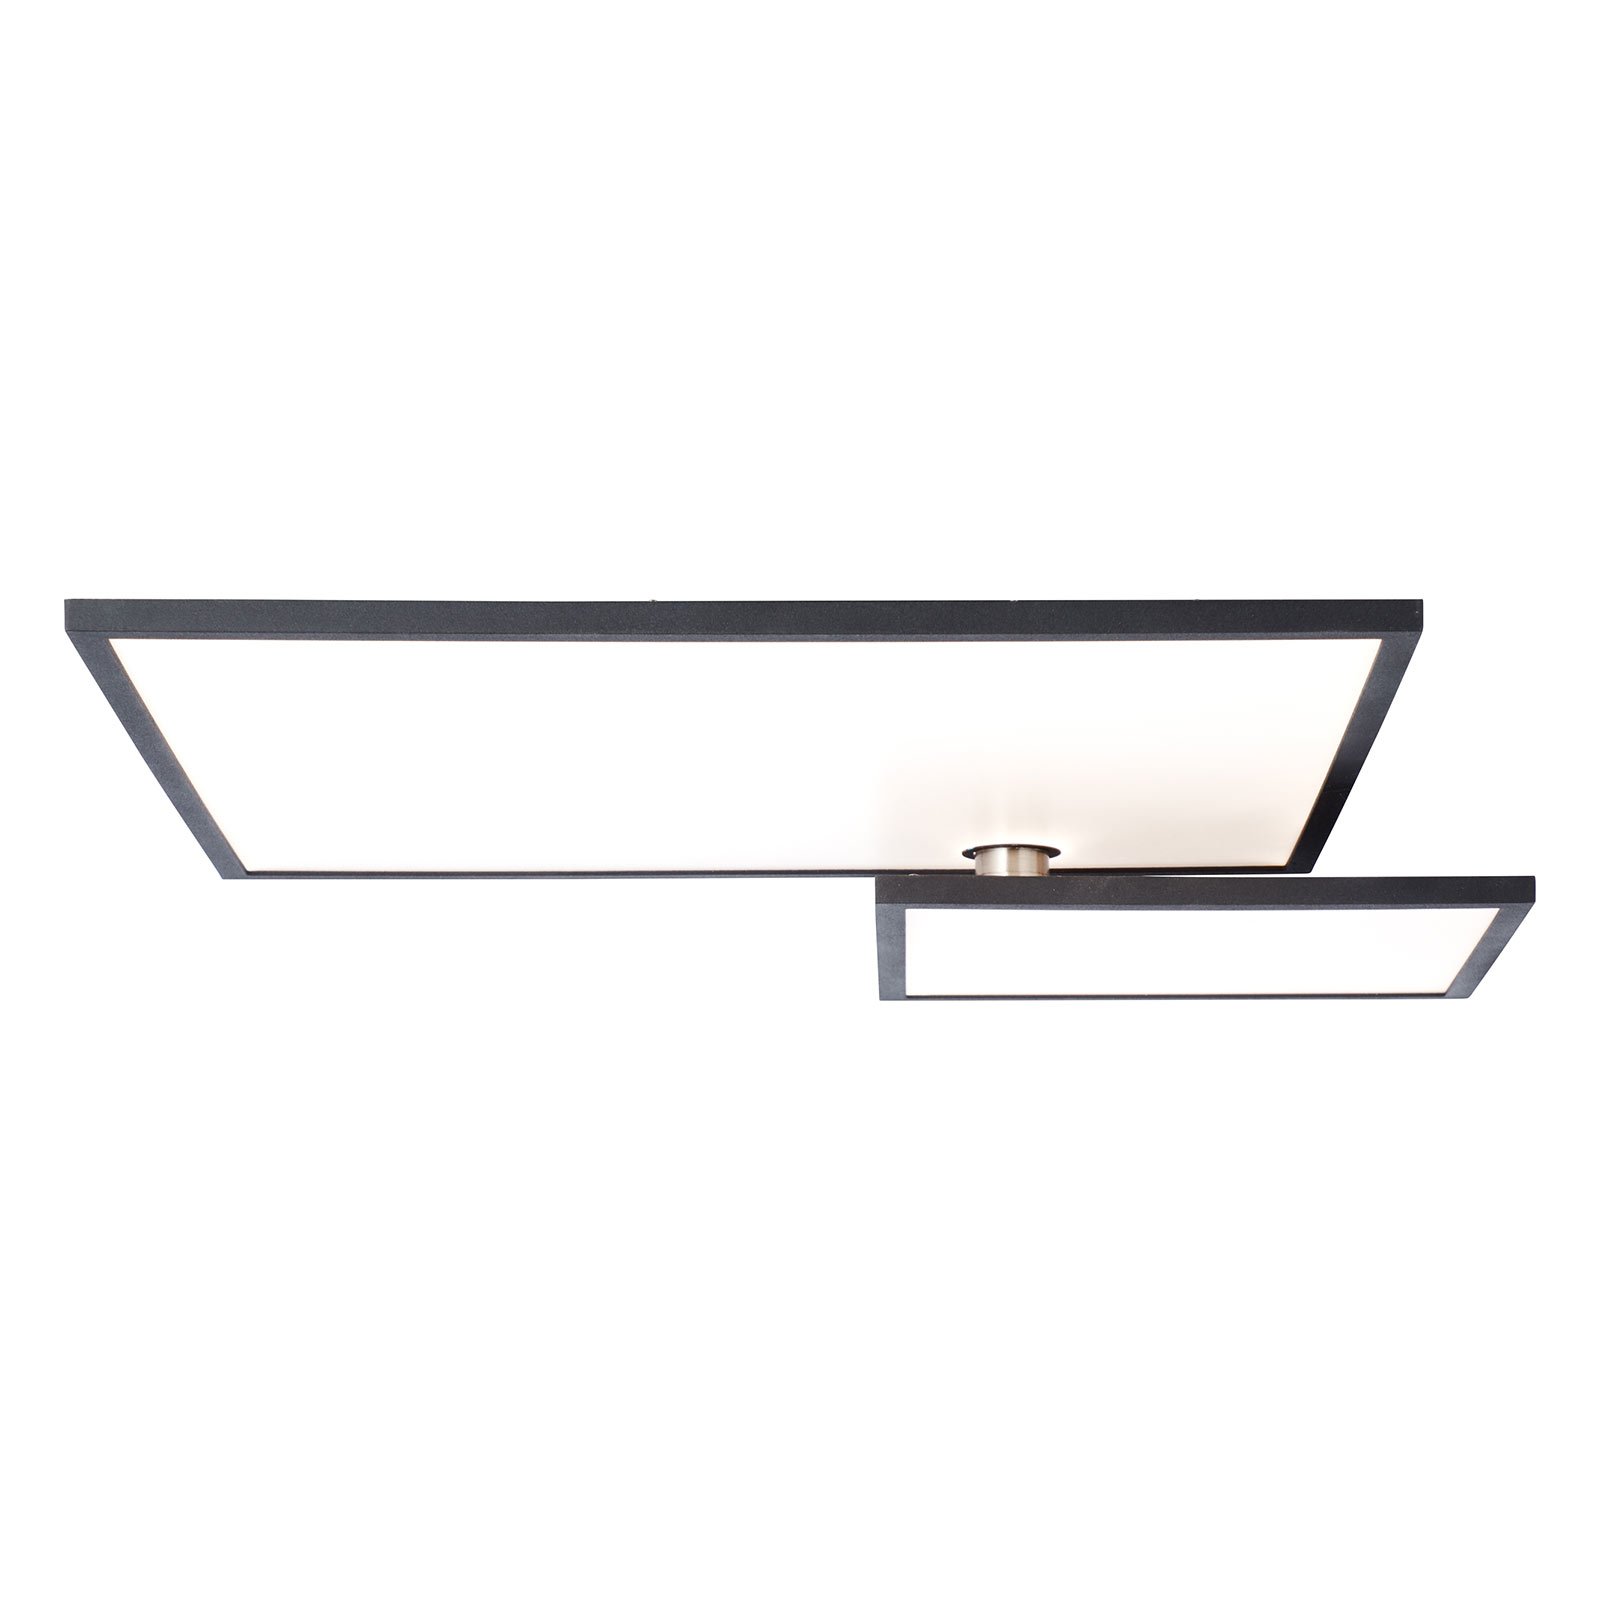 LED plafondlamp Bility, rechthoekig, zwart frame